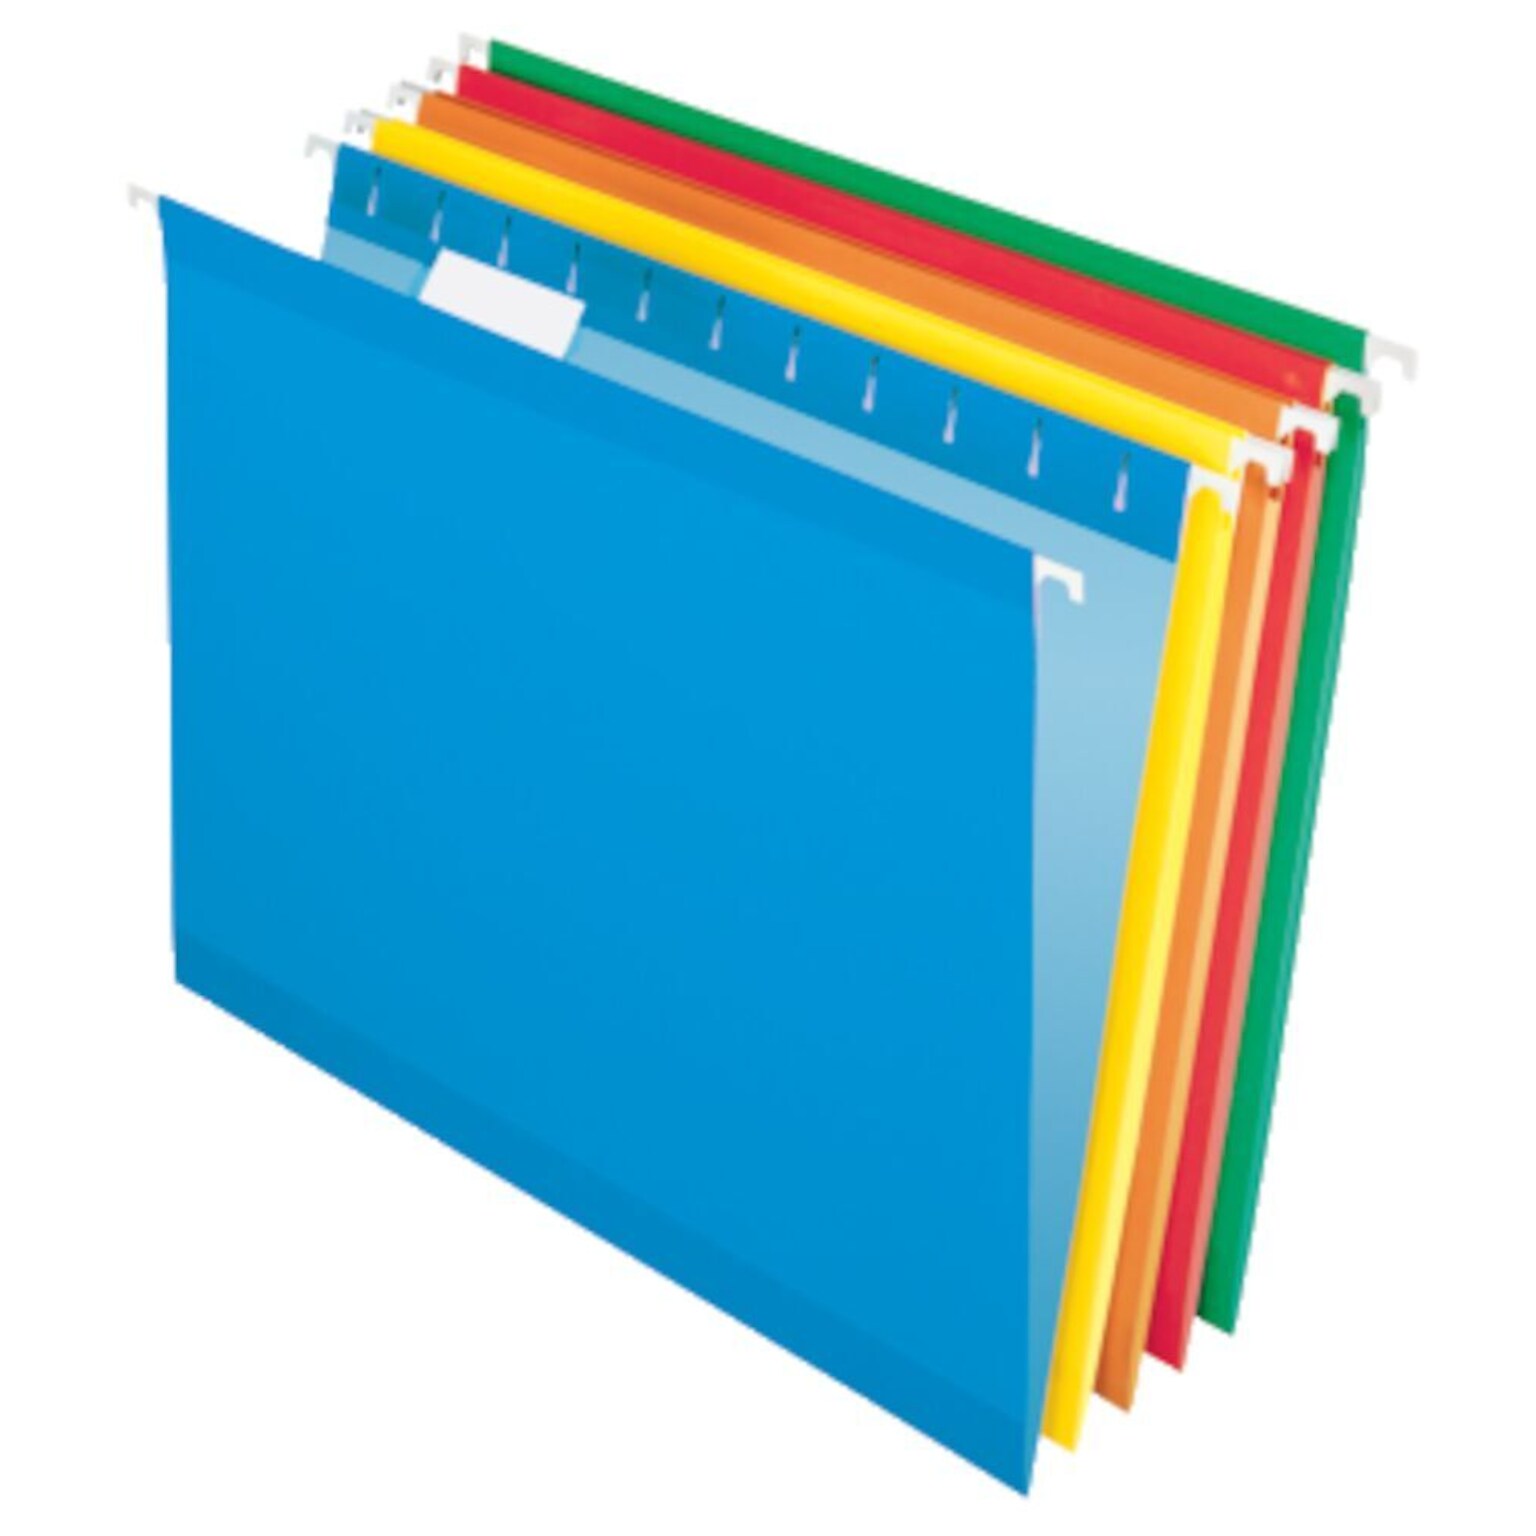 Pendaflex Reinforced Hanging File Folders, 1/5 Tab, Letter Size, Assorted Colors, 25/Box (PFX 4152 1/5 ASST)